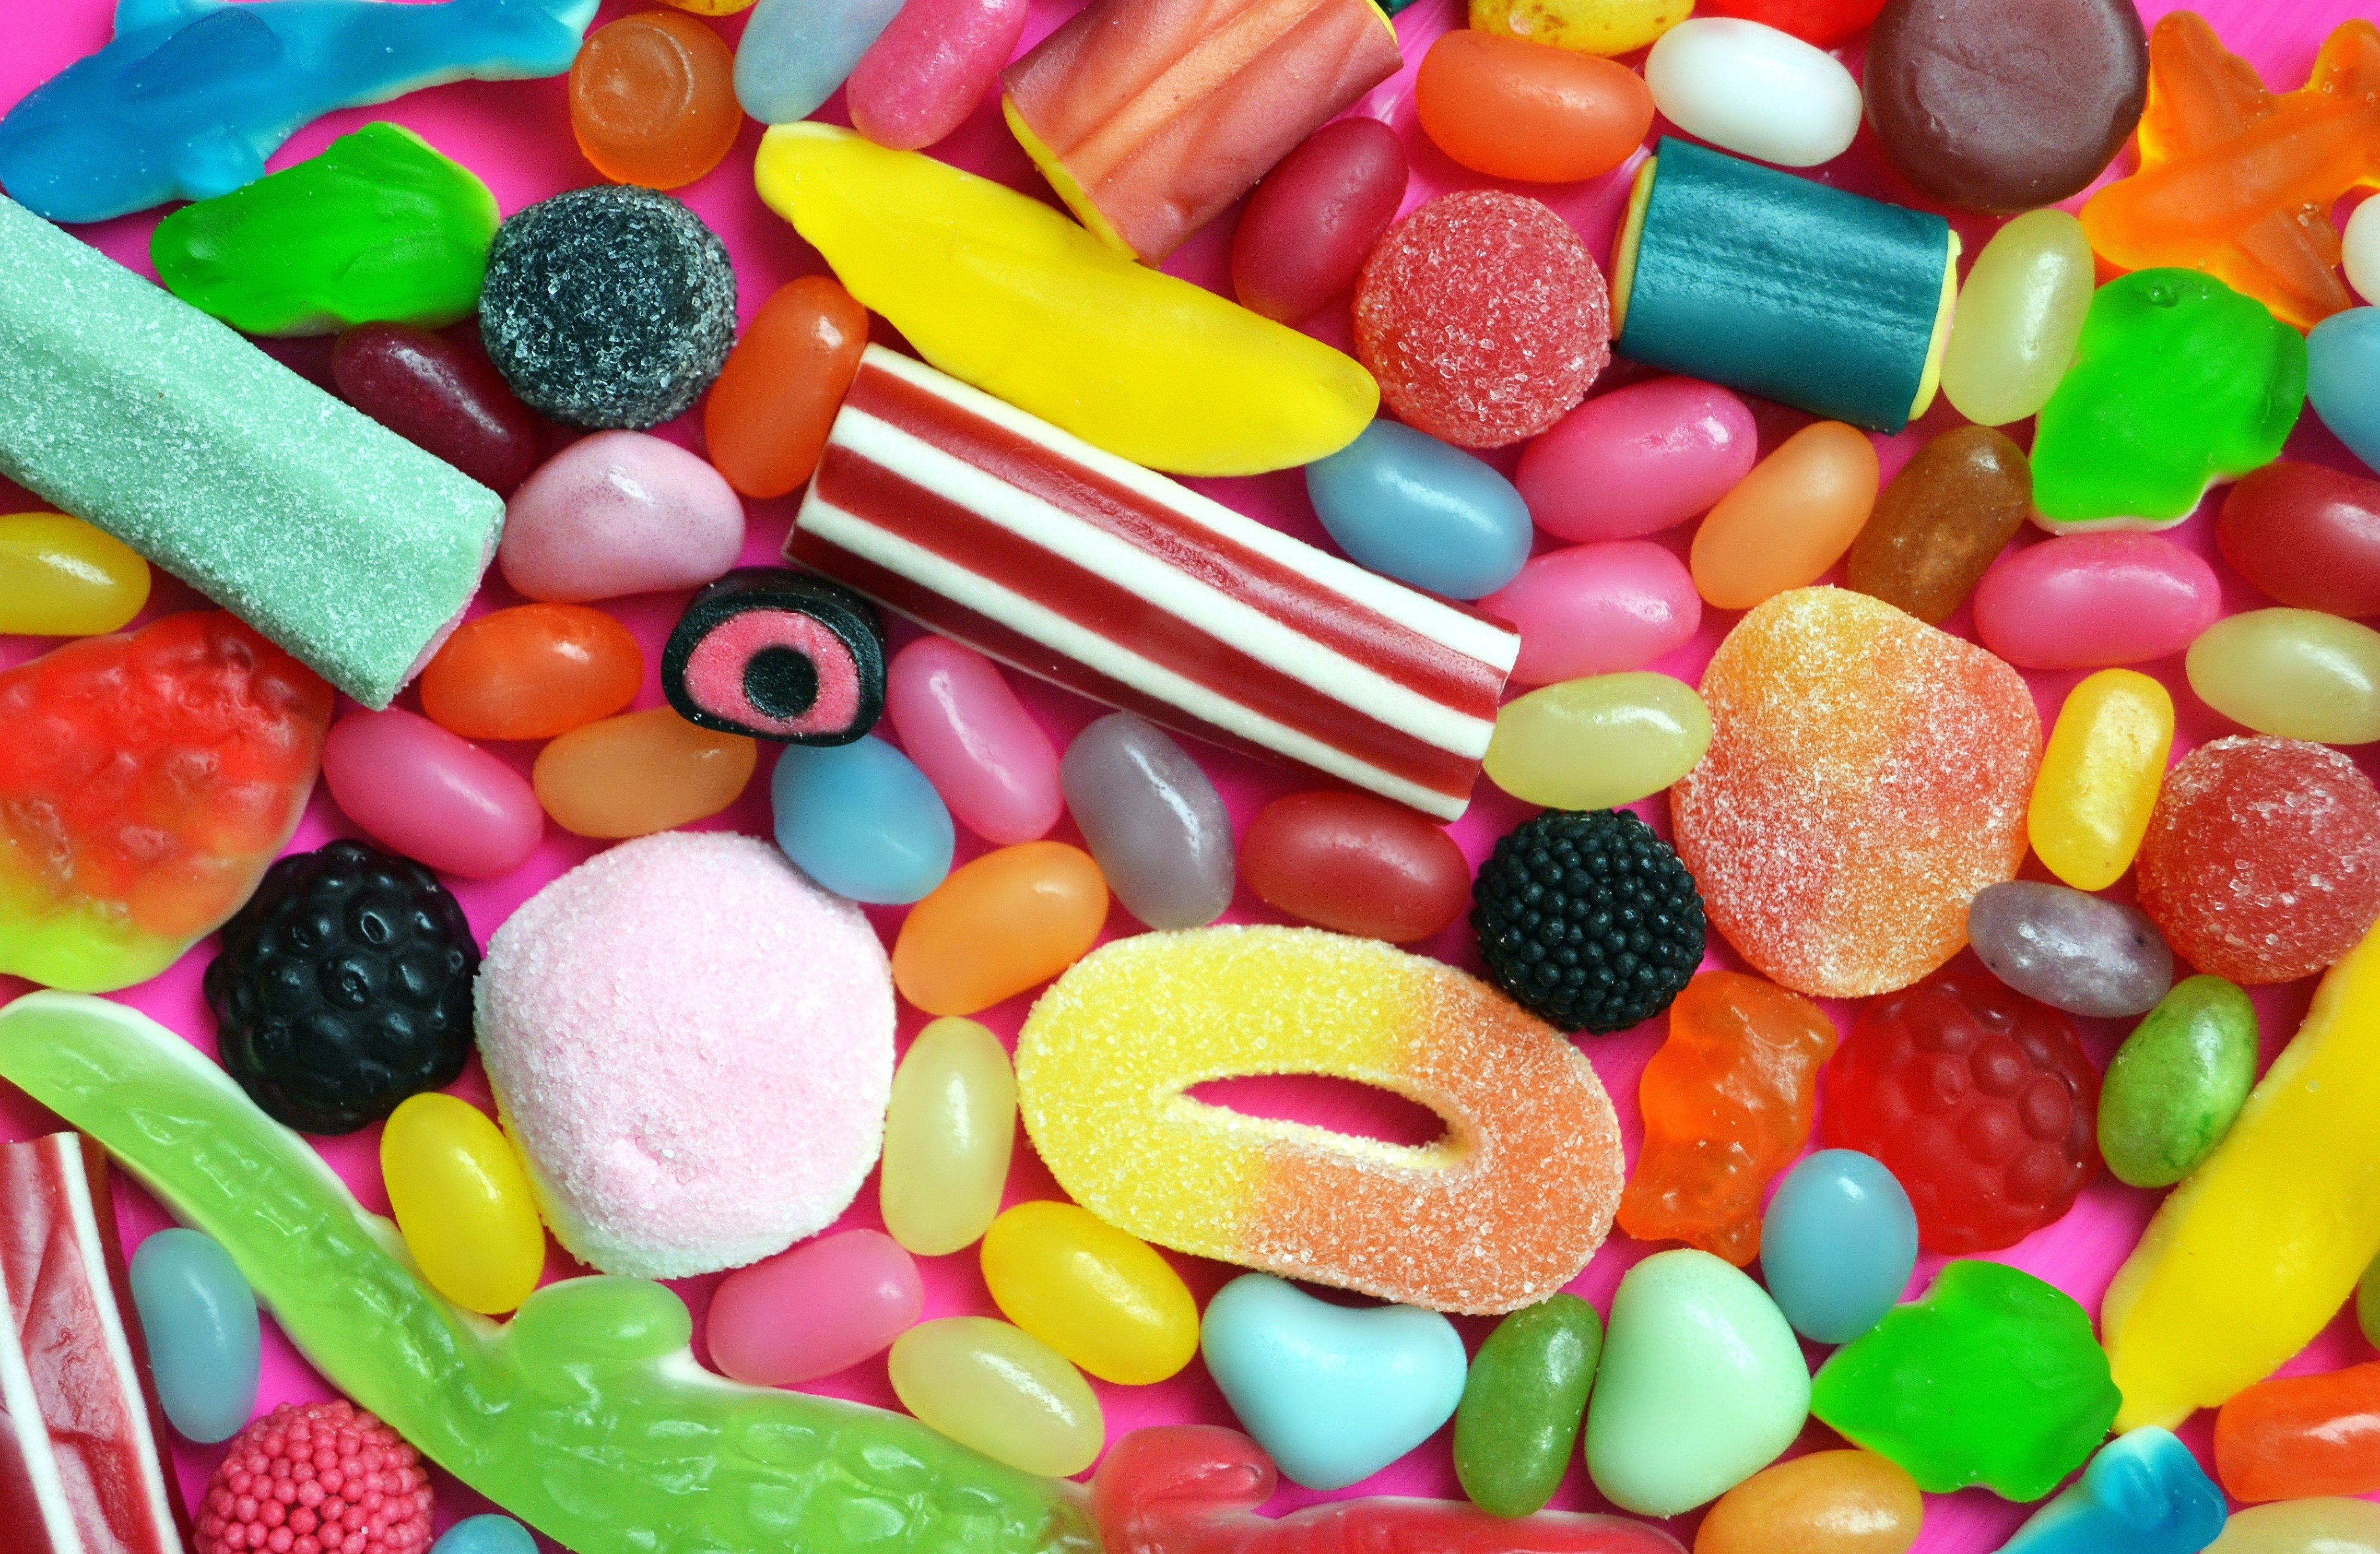 Montón de dulces y caramelos. | Foto: Shutterstock